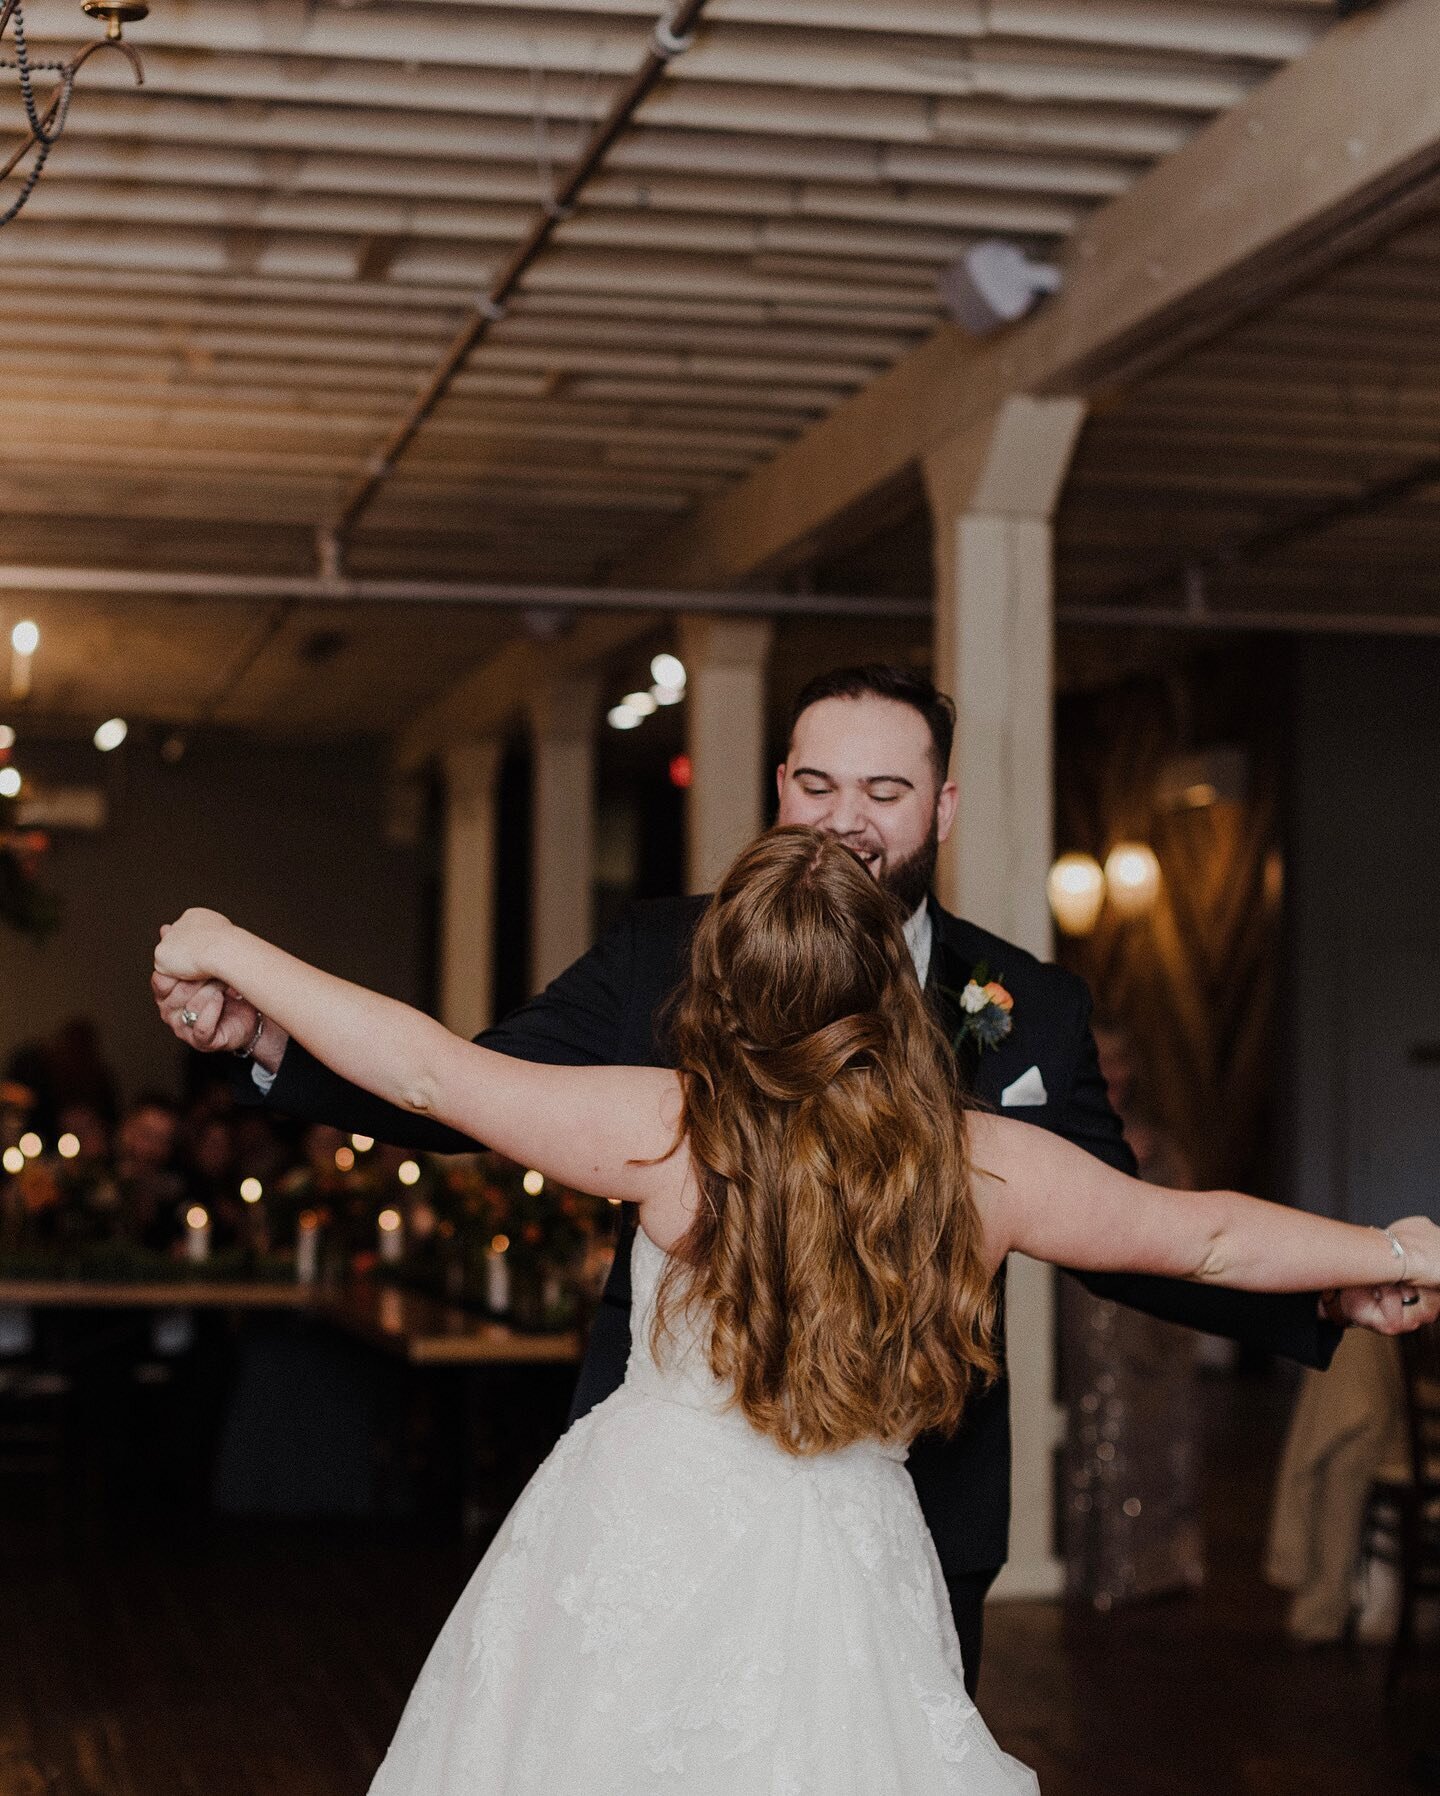 &mdash; from Anna &amp; Noah&rsquo;s first dance at their wedding. 🖤 

#dfwweddings #fortworthweddings #fortworthphotographer #firstdancesong #weddingfirstdance #fortworthtexas